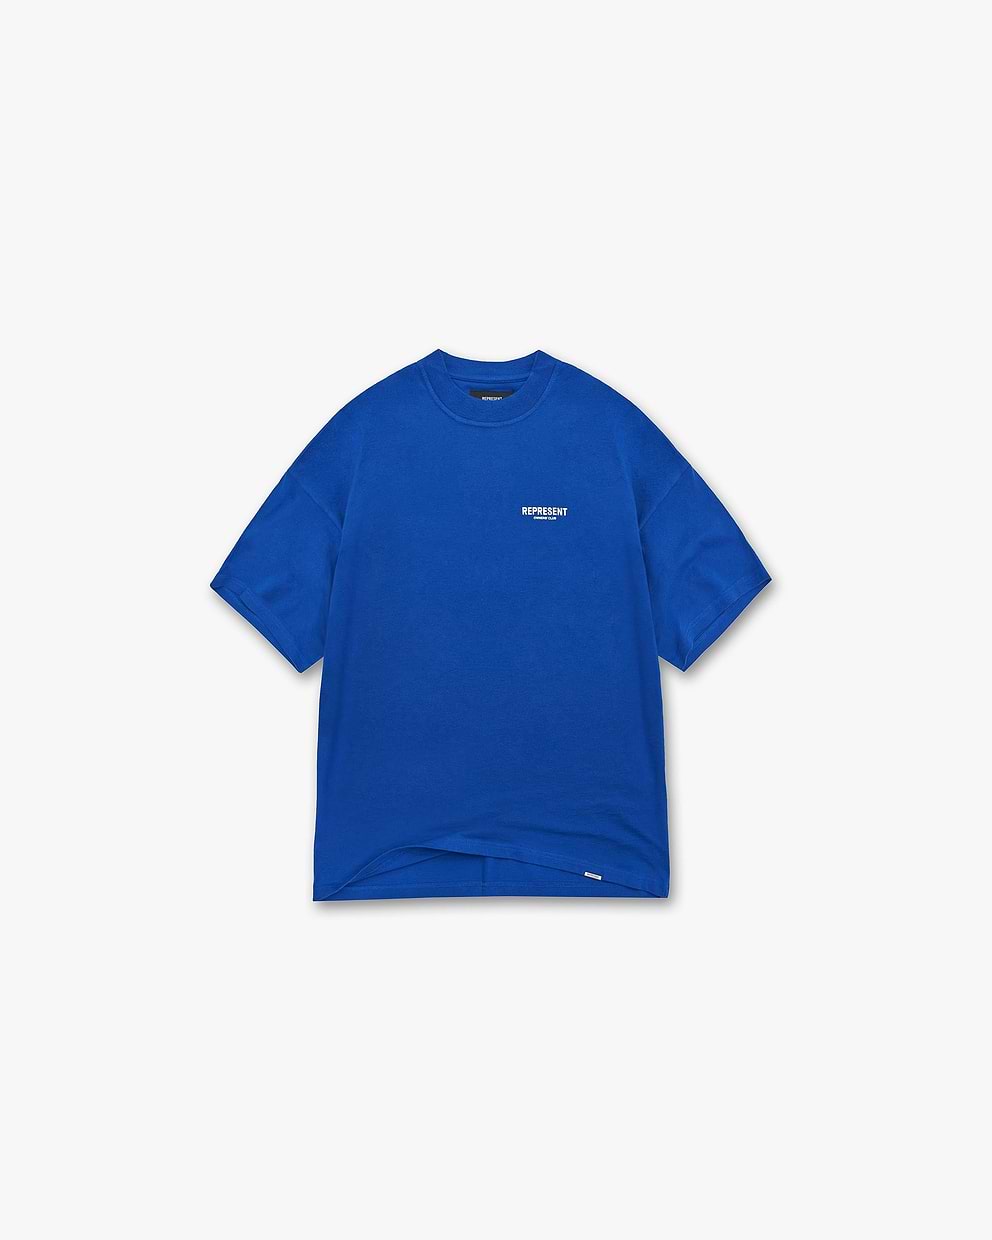 Represent Owners Club T-Shirt - Cobalt